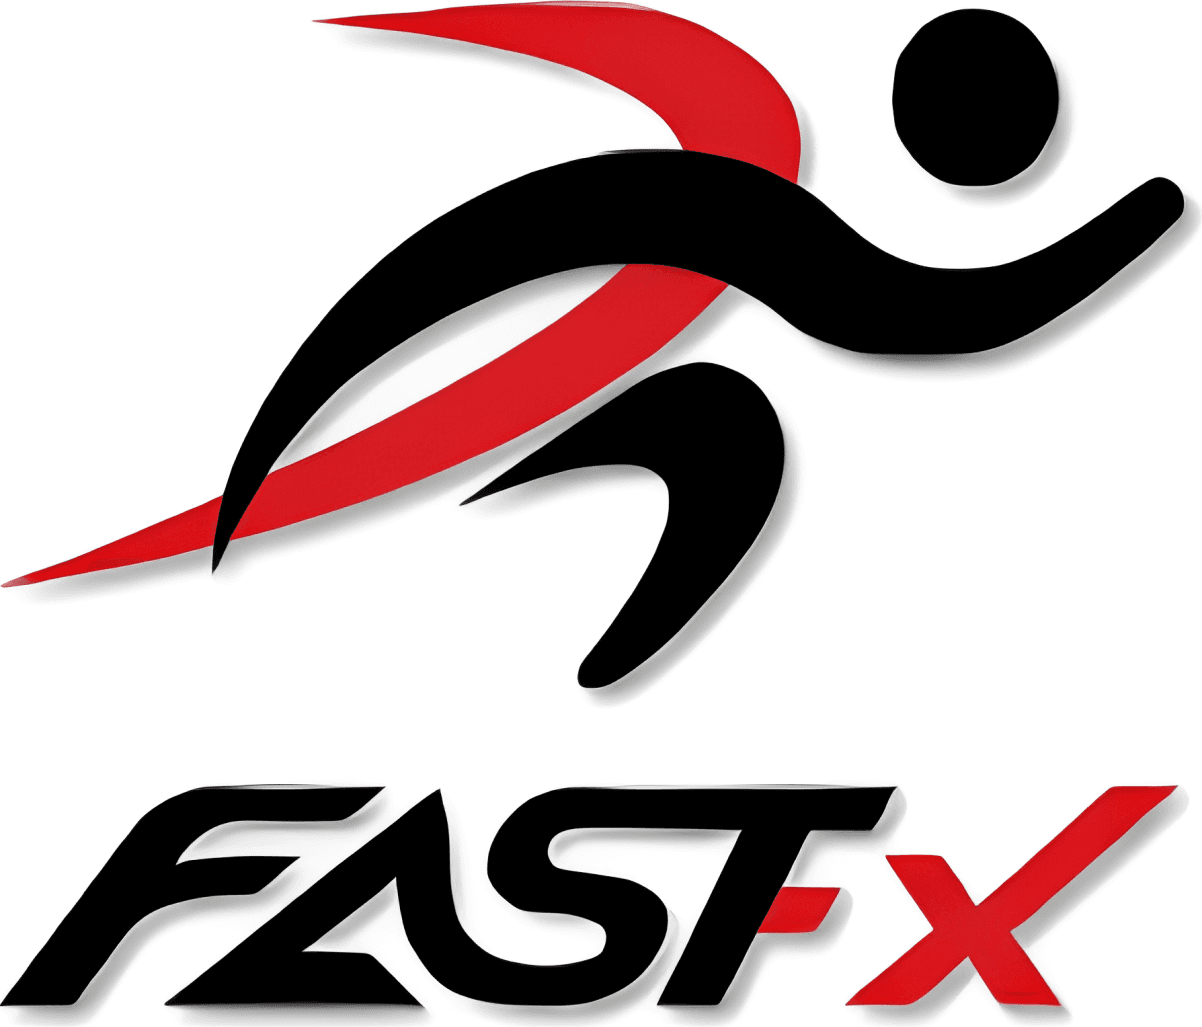 FastFX